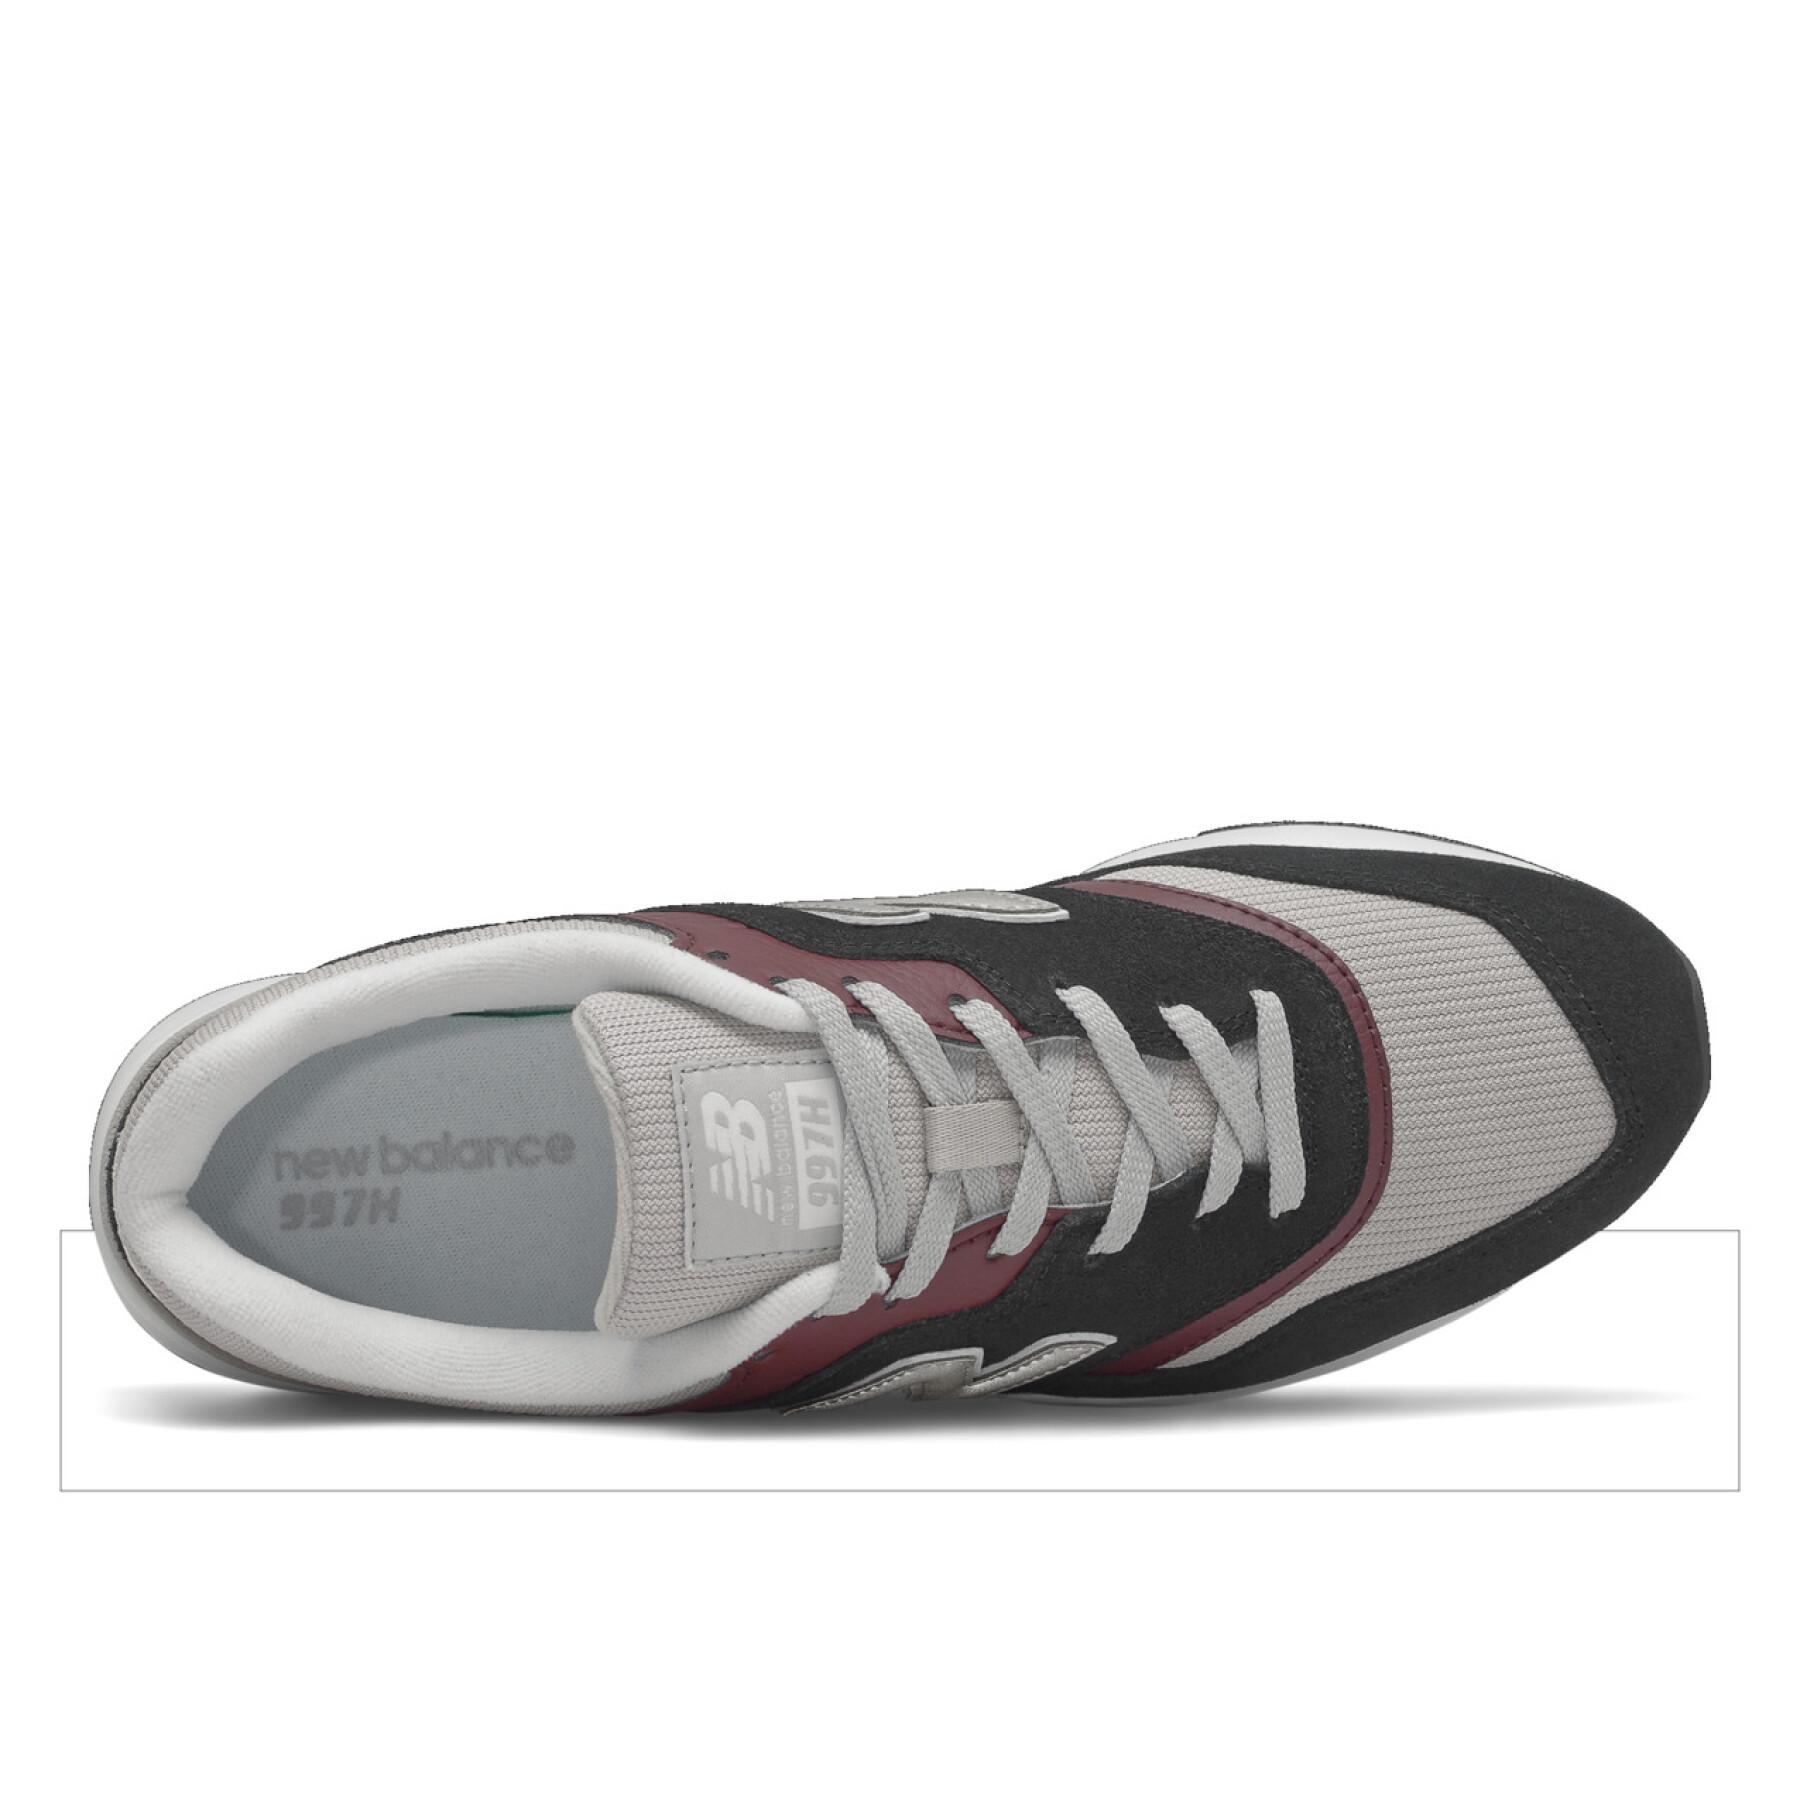 Schuhe New Balance cm997h